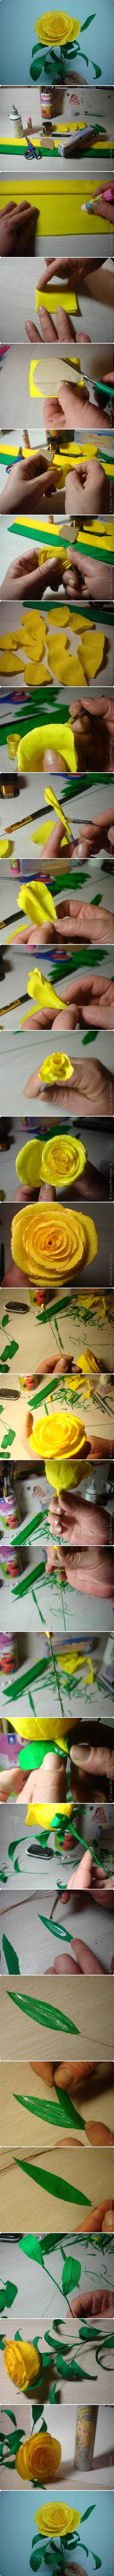 DIY Handmade Roses